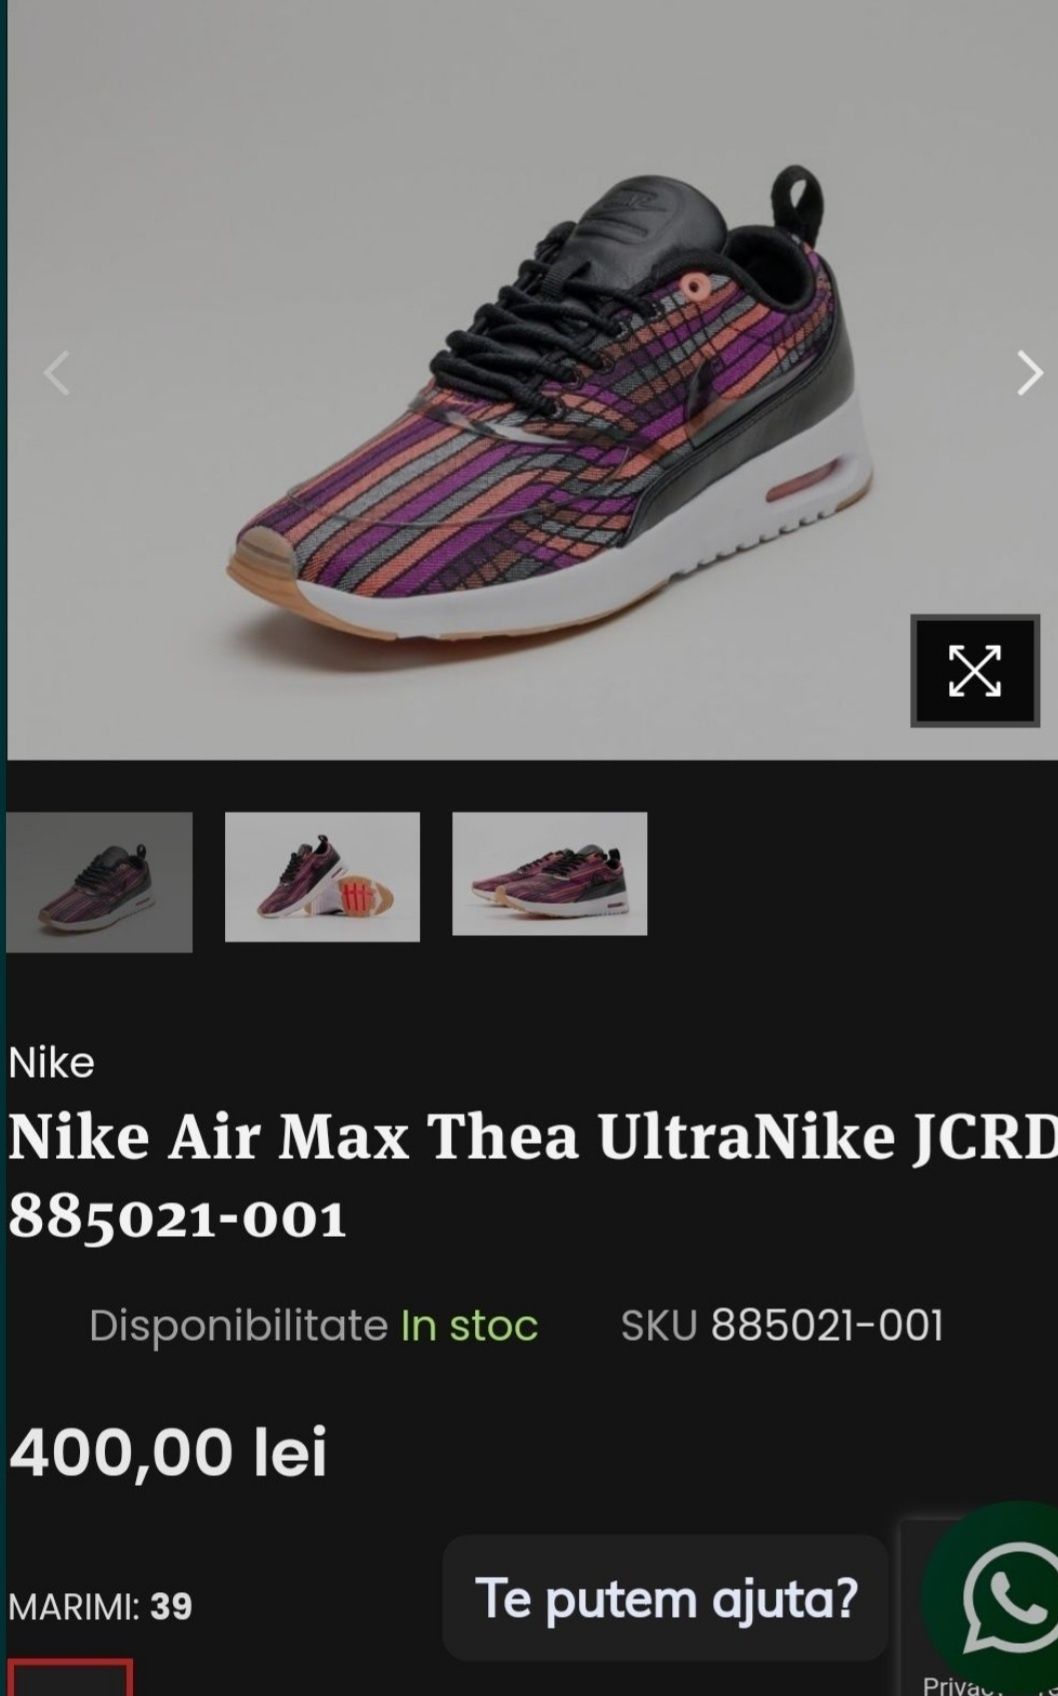 Adidas Nike Airmax Thea originali măsura 41